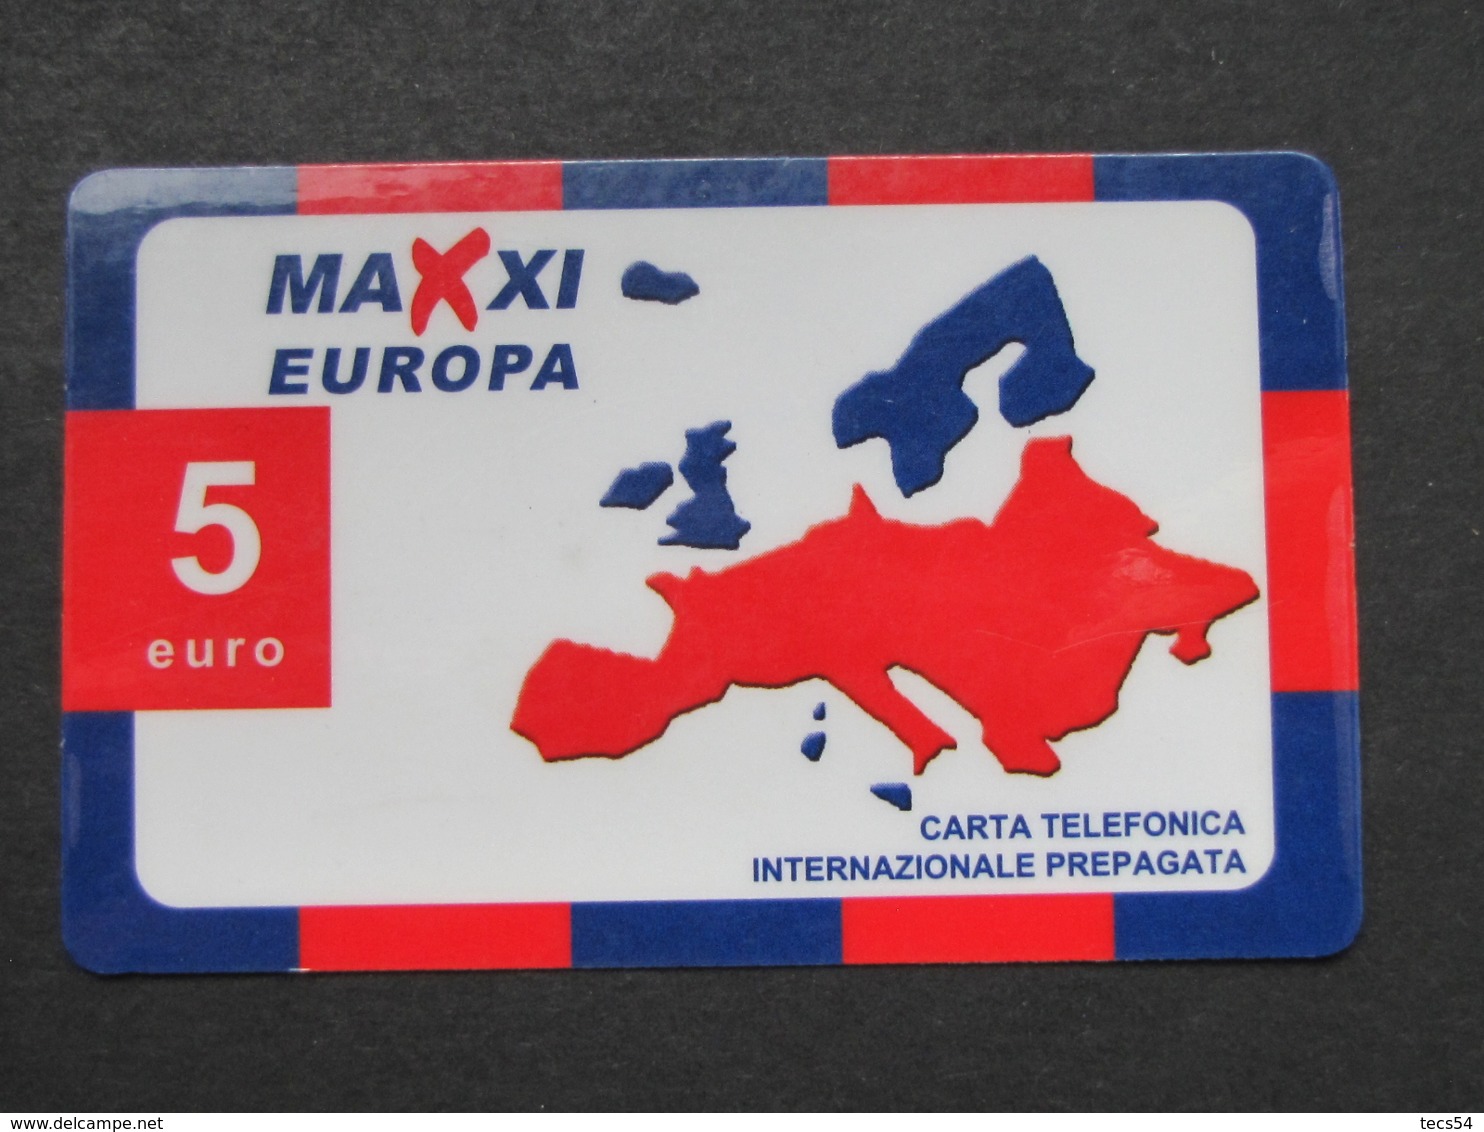 *ITALY* USATA USED - INTERNATIONAL PREPAID PHONE CARD - MAXI EUROPA - Schede GSM, Prepagate & Ricariche